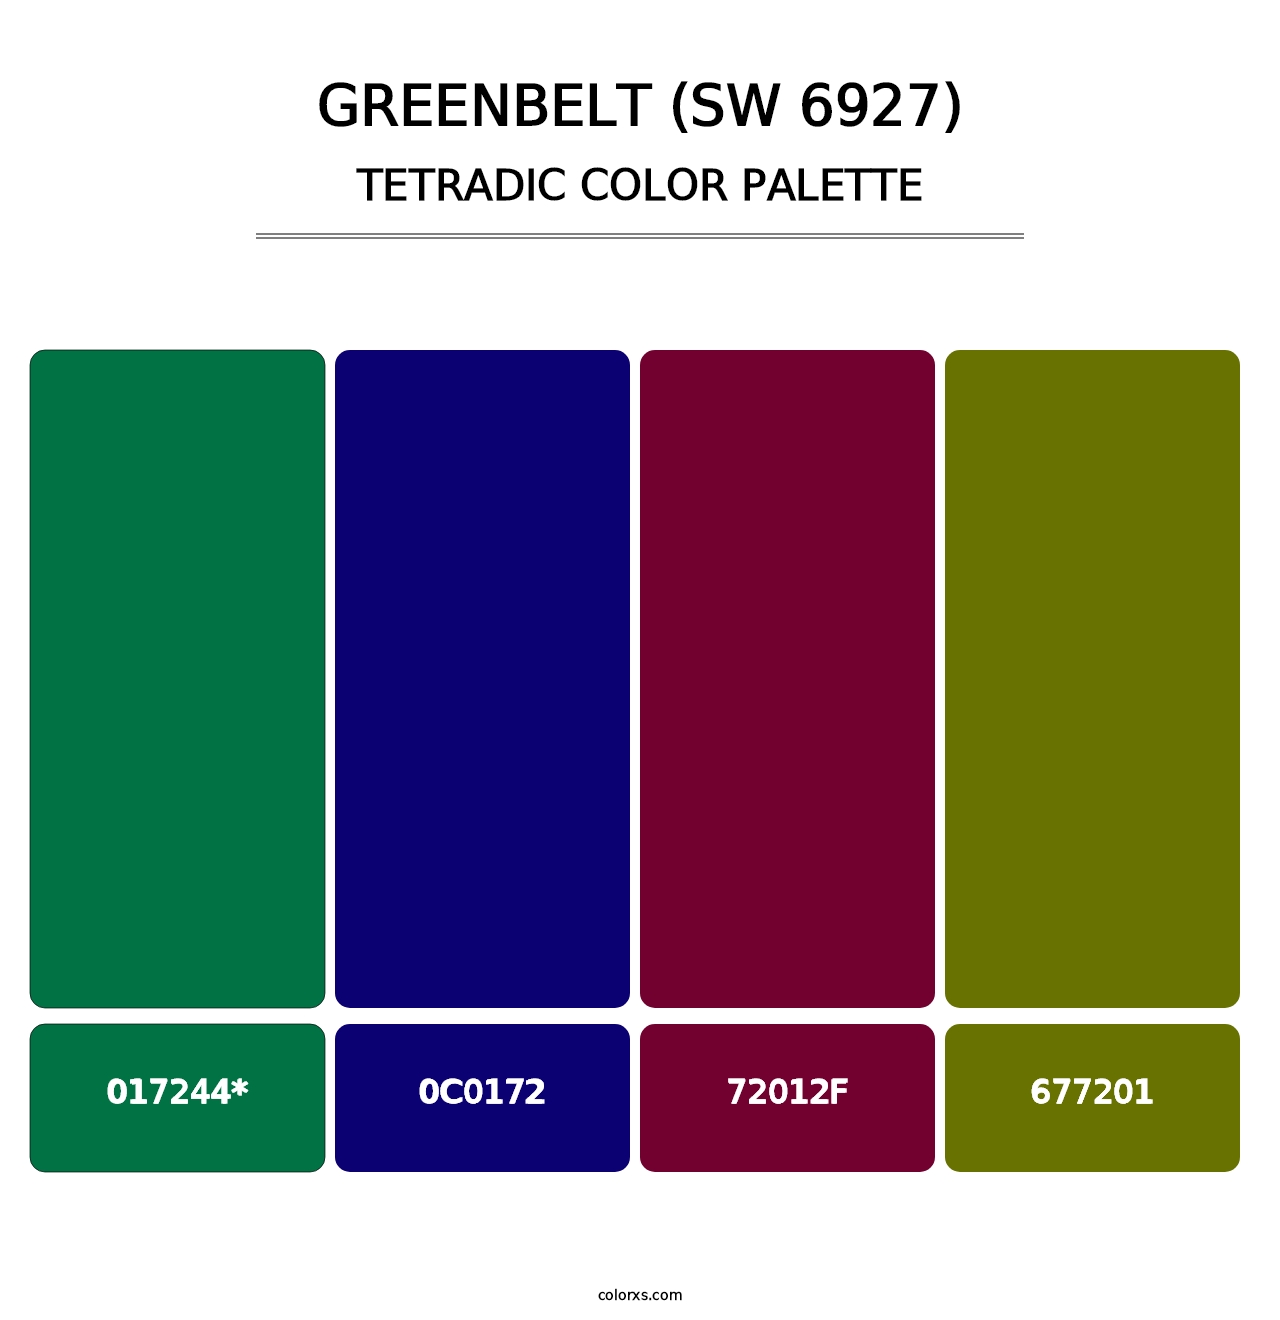 Greenbelt (SW 6927) - Tetradic Color Palette